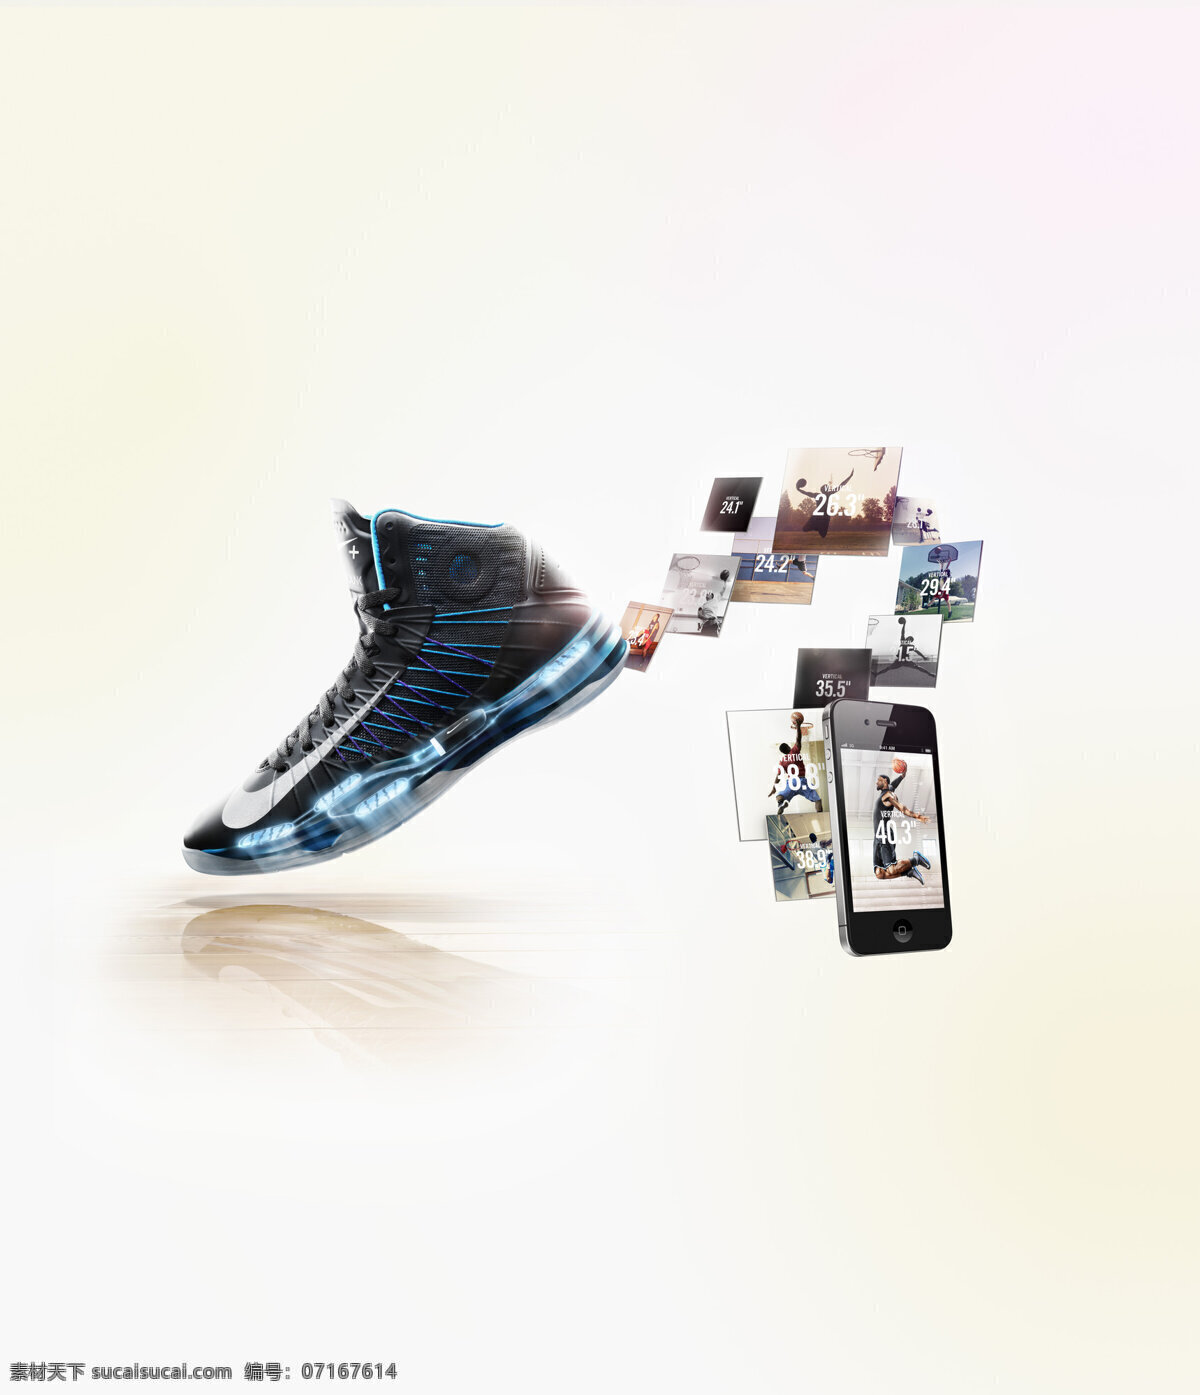 nike 足球 系列 广告宣传 平面 平面广告 篮球鞋 体育运动 文化艺术